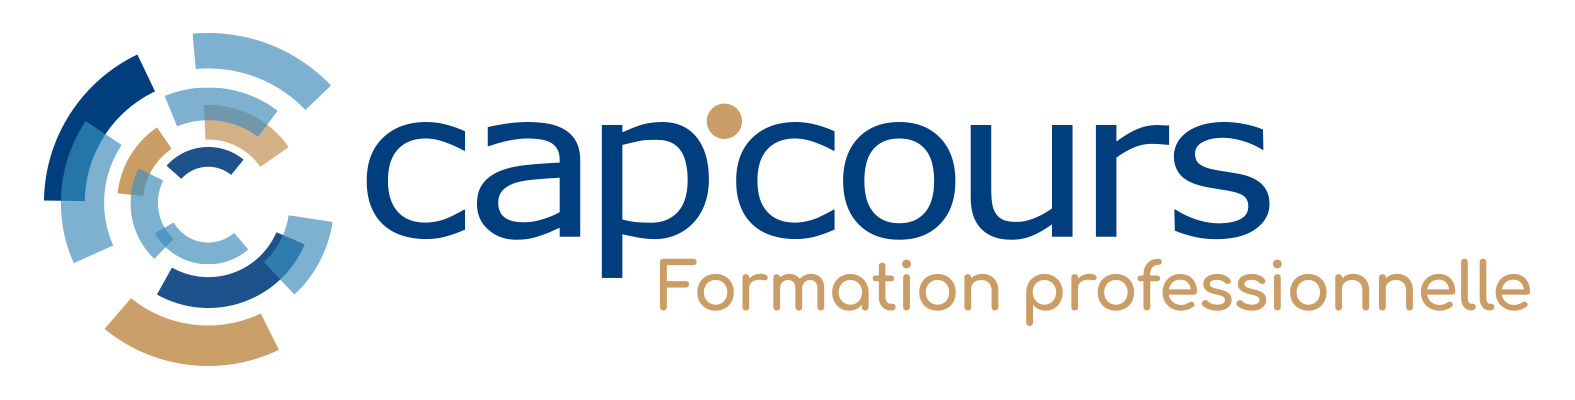 Logo capcours formation professionnelle